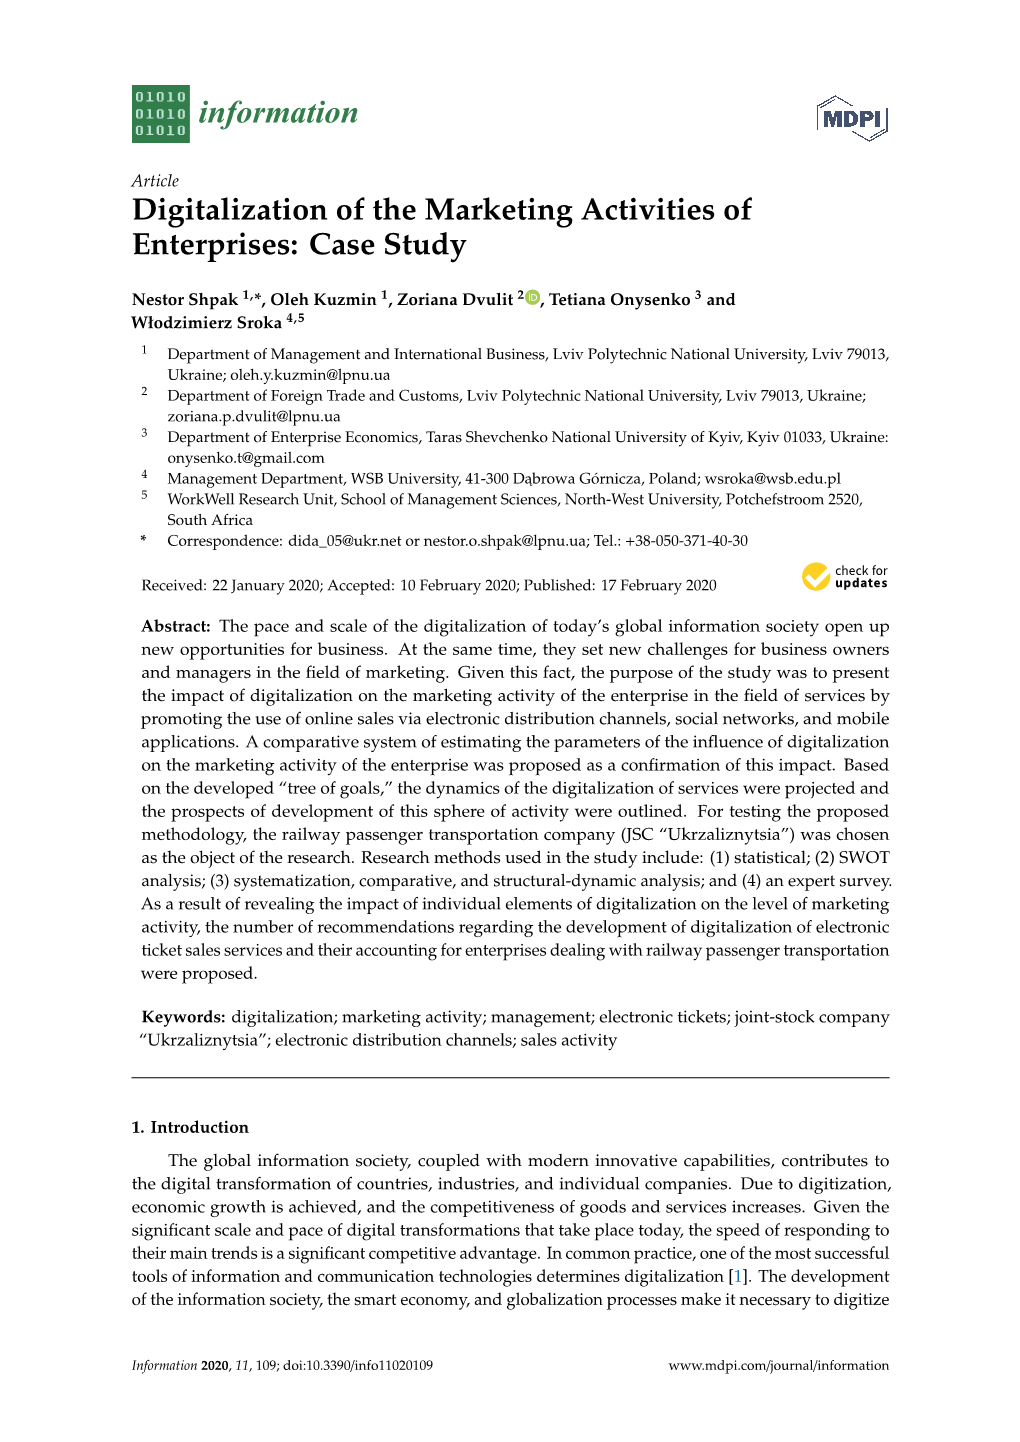 Digitalization of the Marketing Activities of Enterprises: Case Study